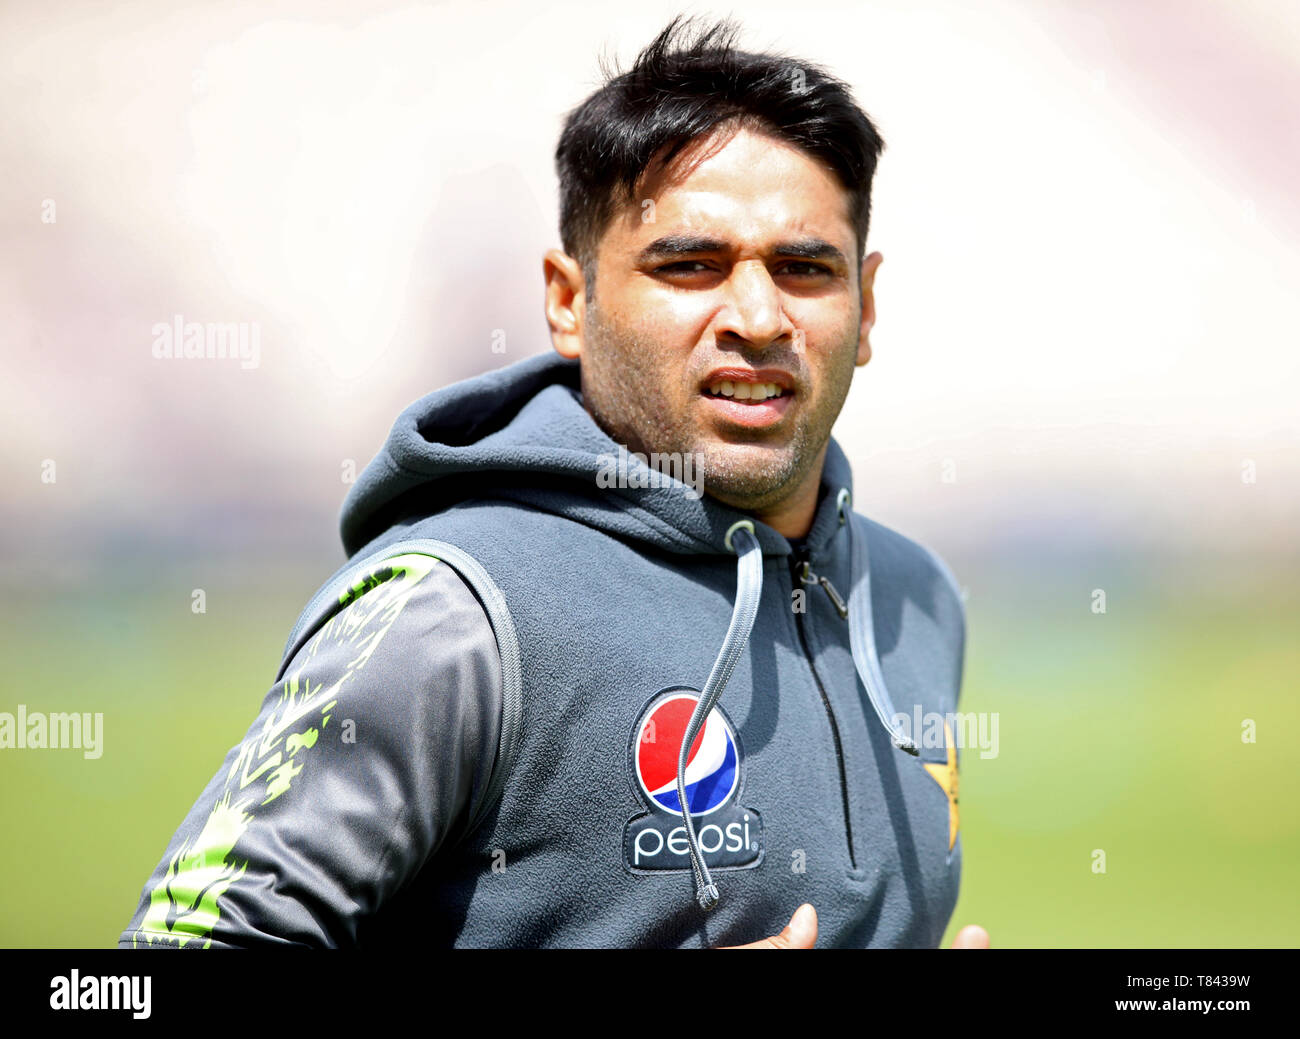 Ali abid Pakistan batsman